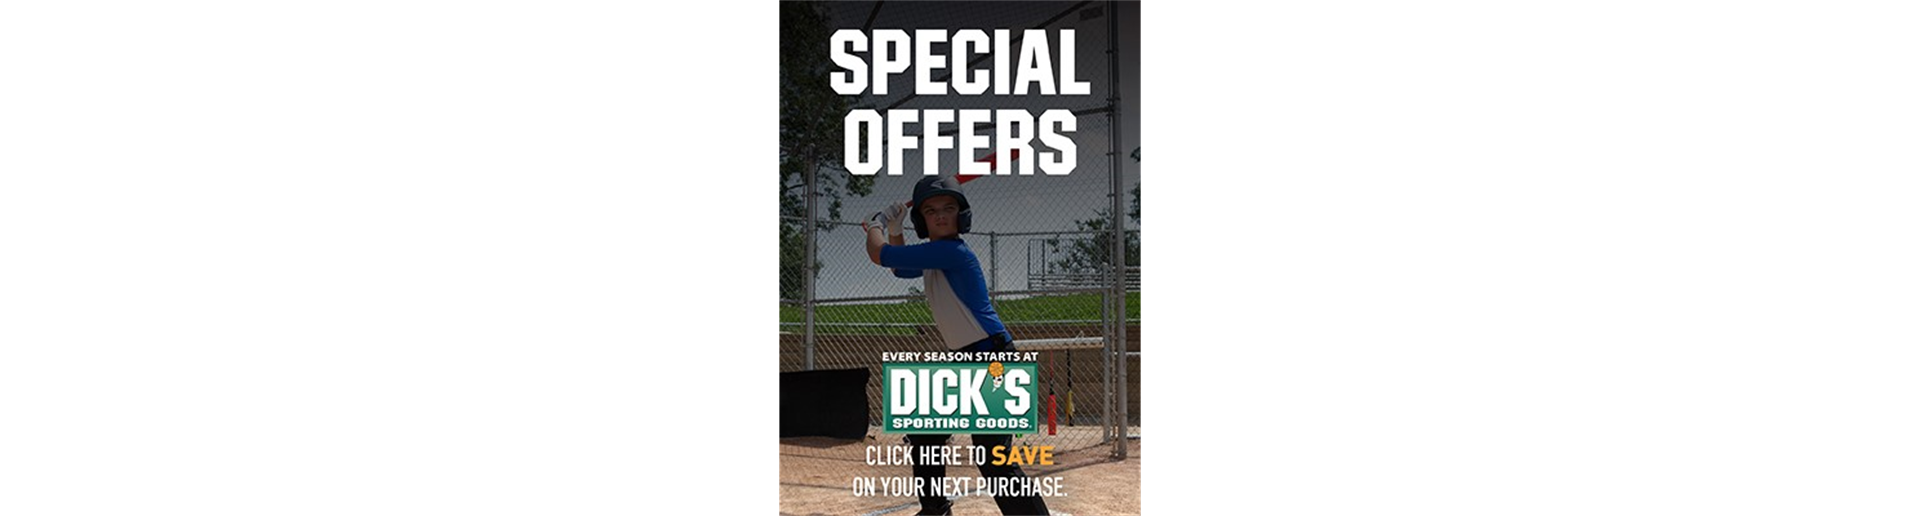 Season Long Savings @ DICK'S Sporting Goods